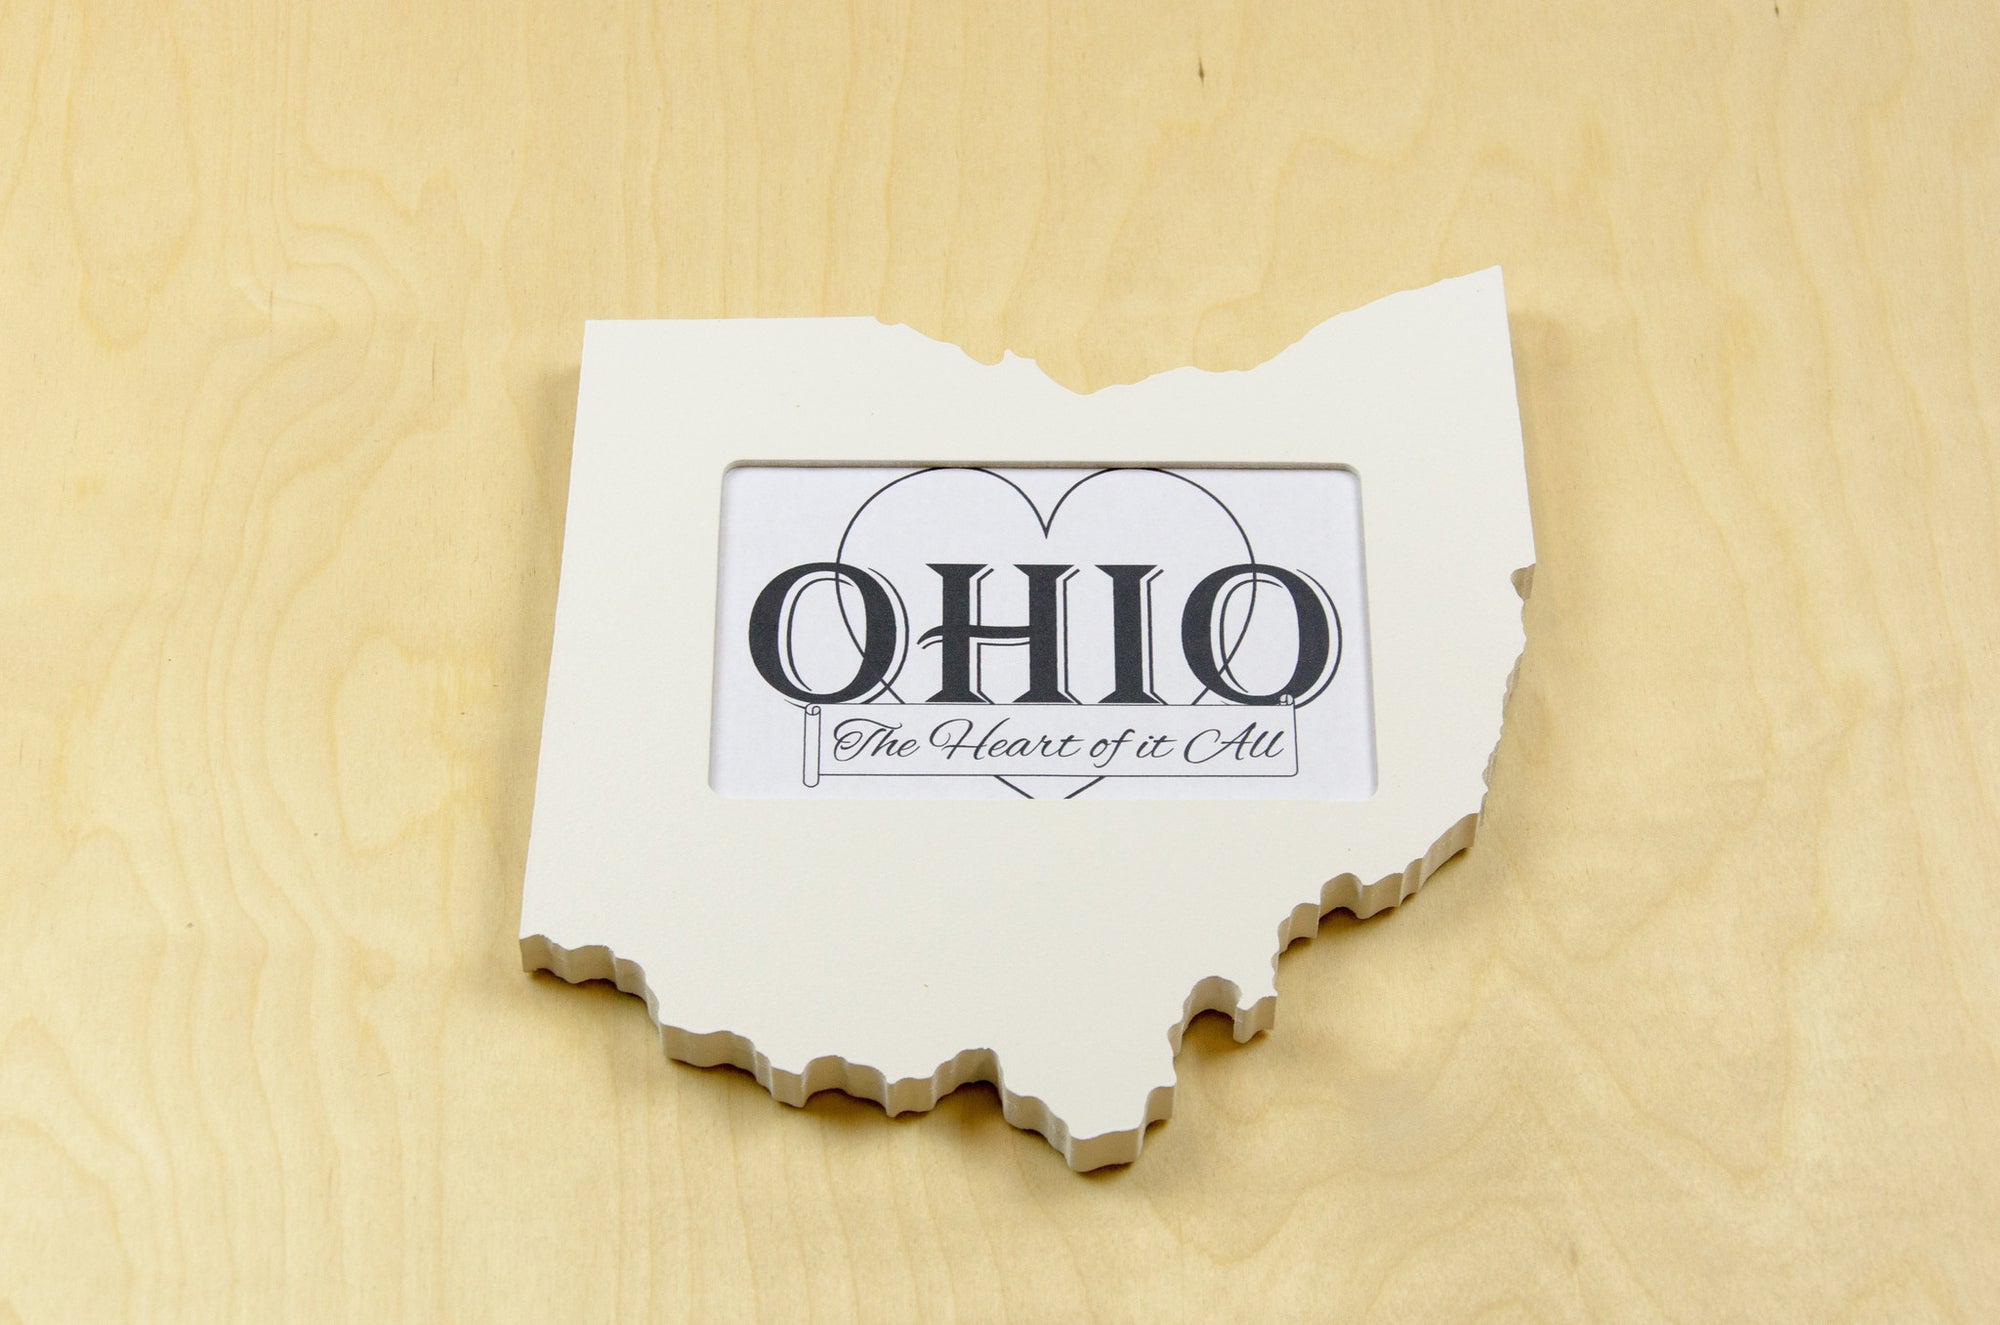 Ohio picture frame 4x6